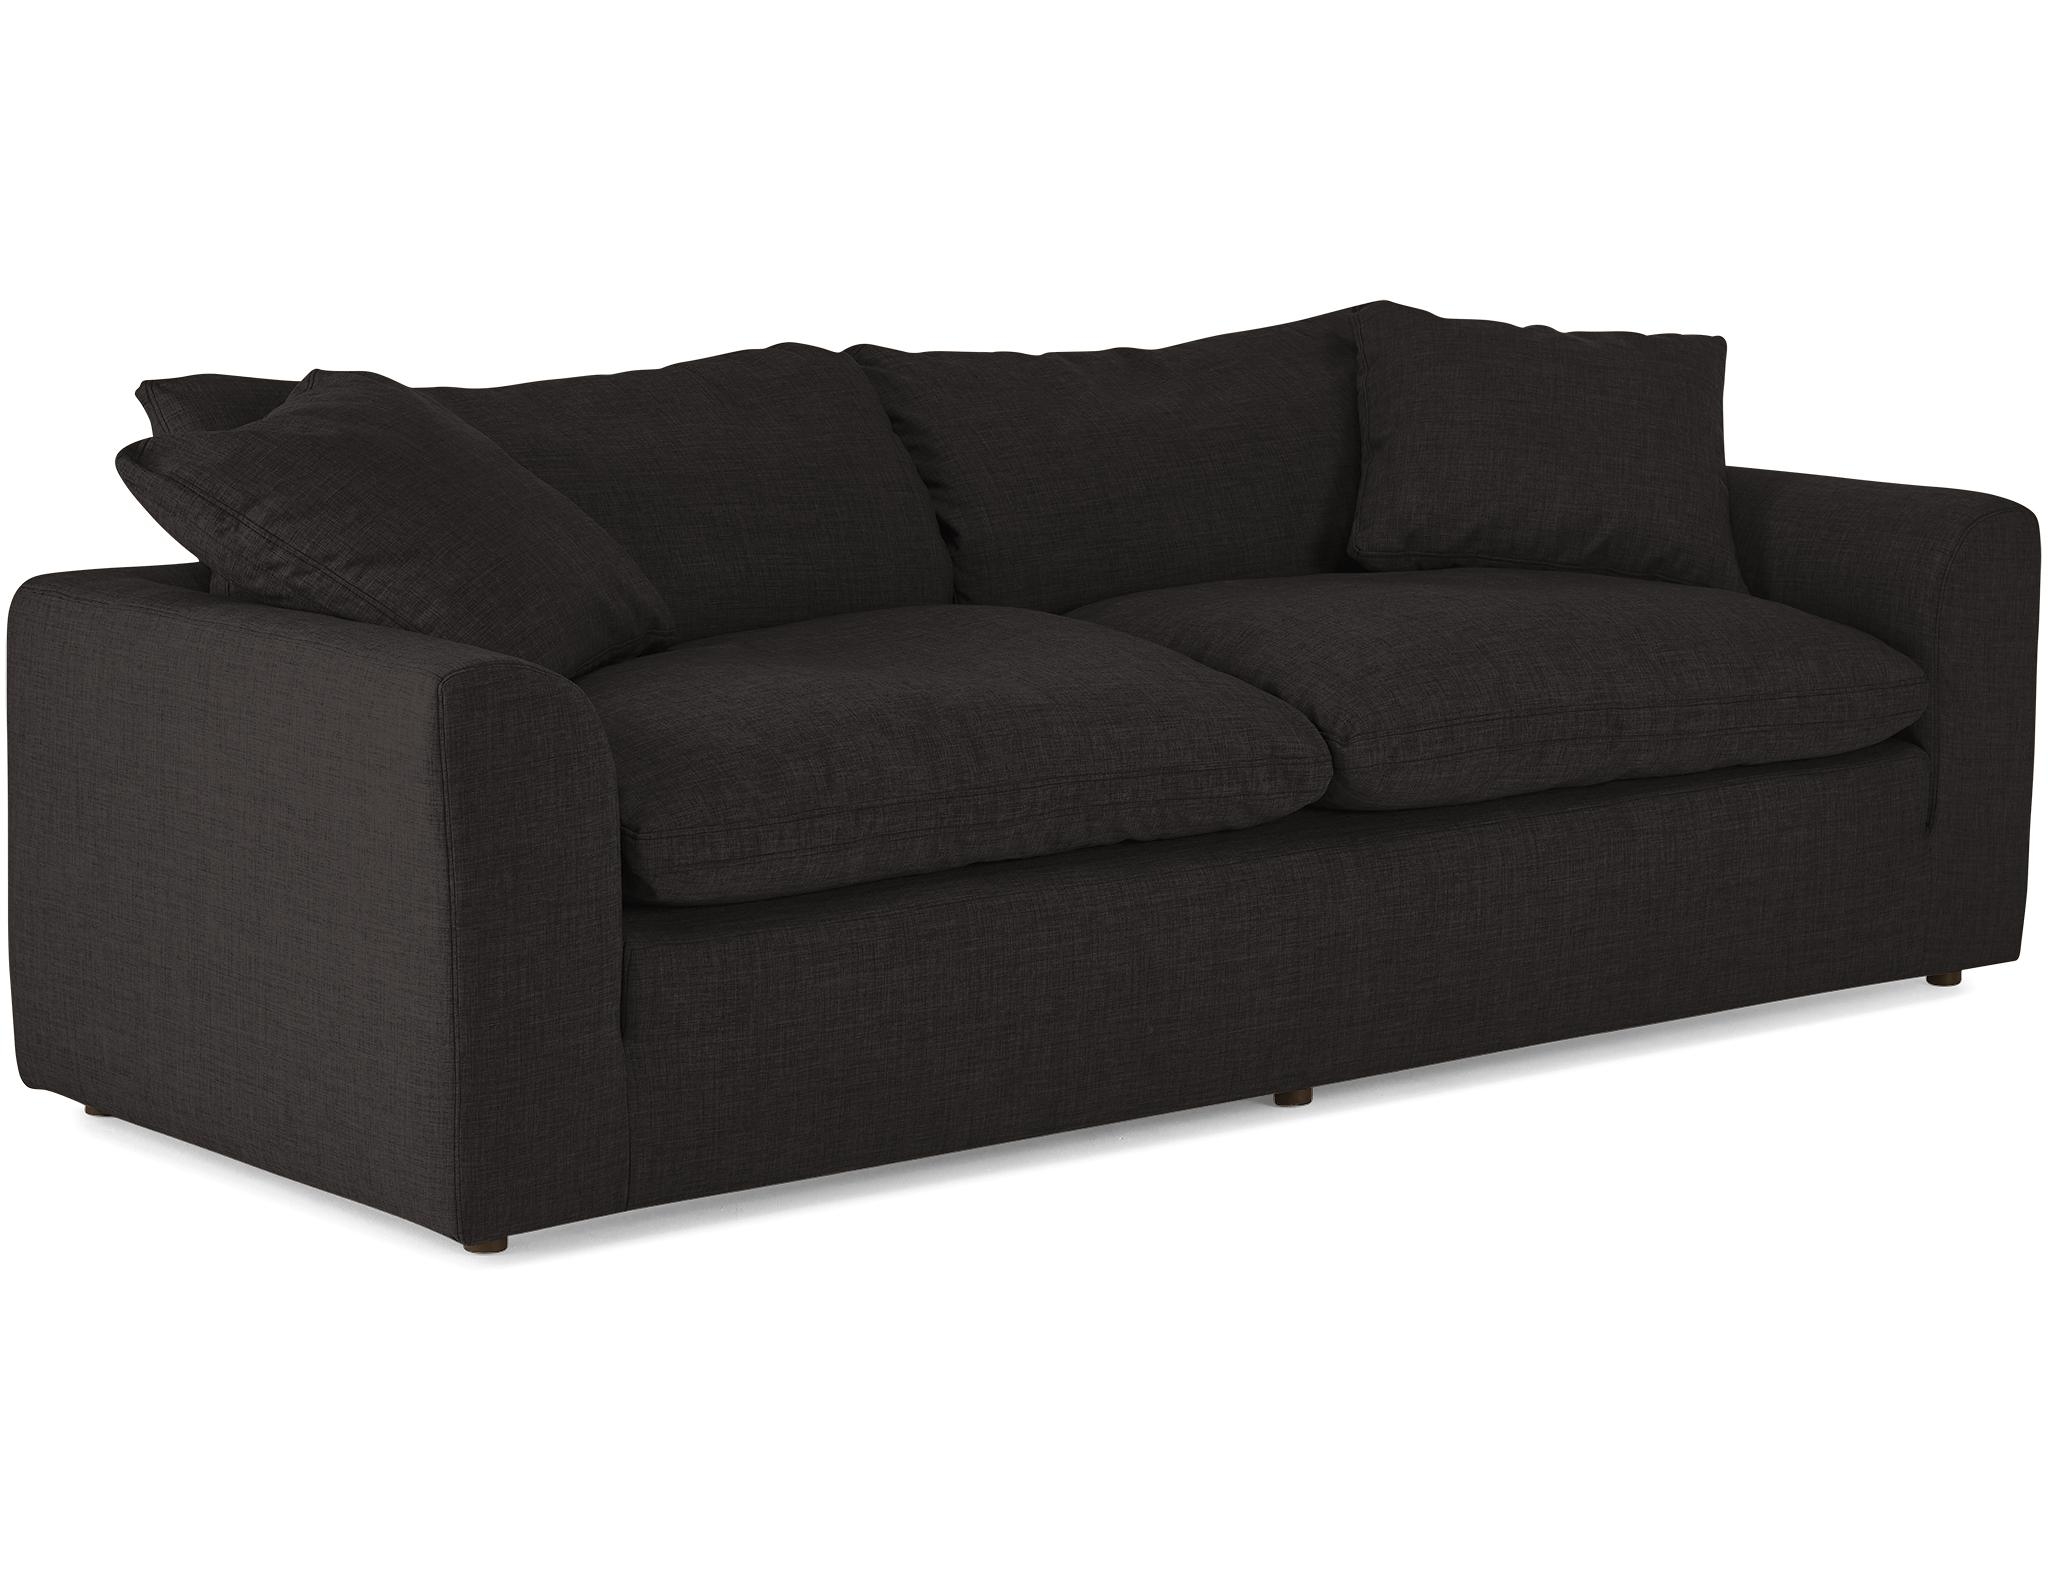 Gray Bryant Mid Century Modern Sofa - Cordova Eclipse - Image 1